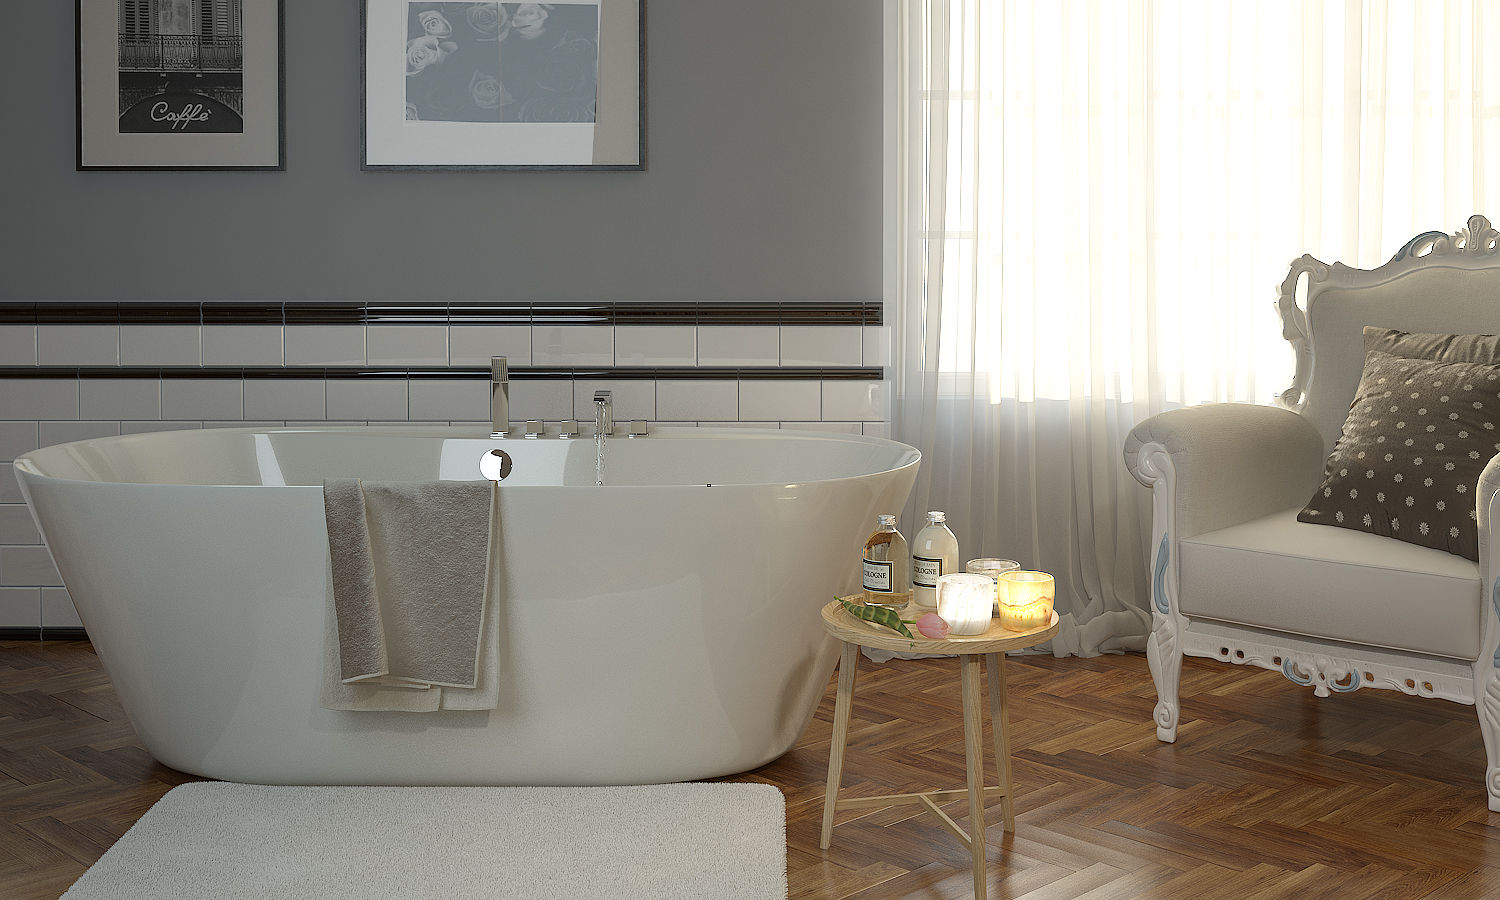 Catalogo Ceramiche Pirrera, olivia Sciuto olivia Sciuto Phòng tắm phong cách hiện đại Bathtubs & showers